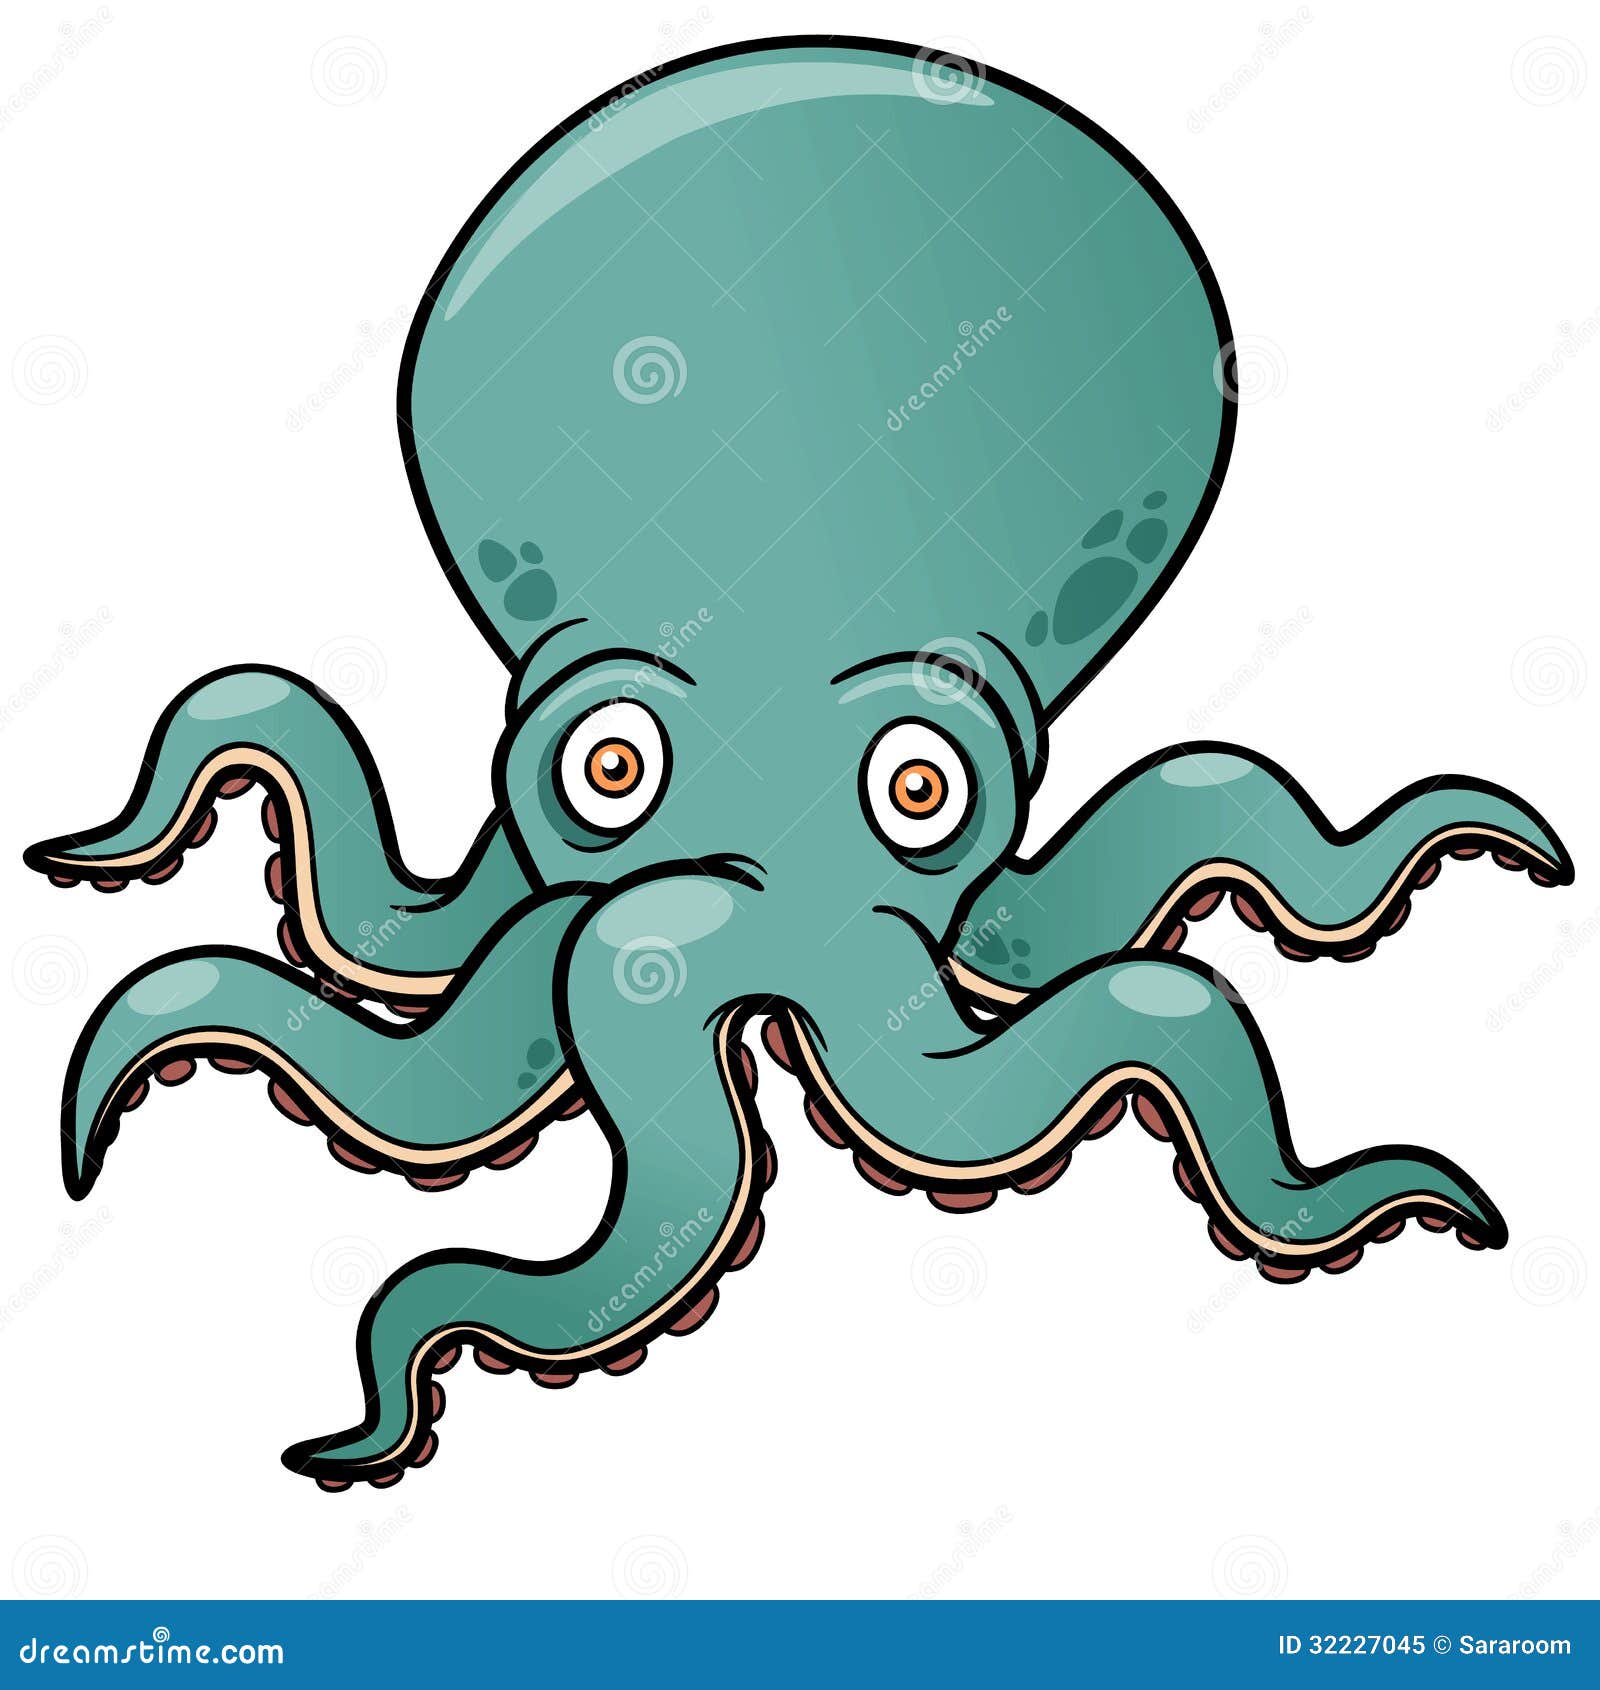 Cartoon octopus stock vector. Illustration of wildlife - 32227045